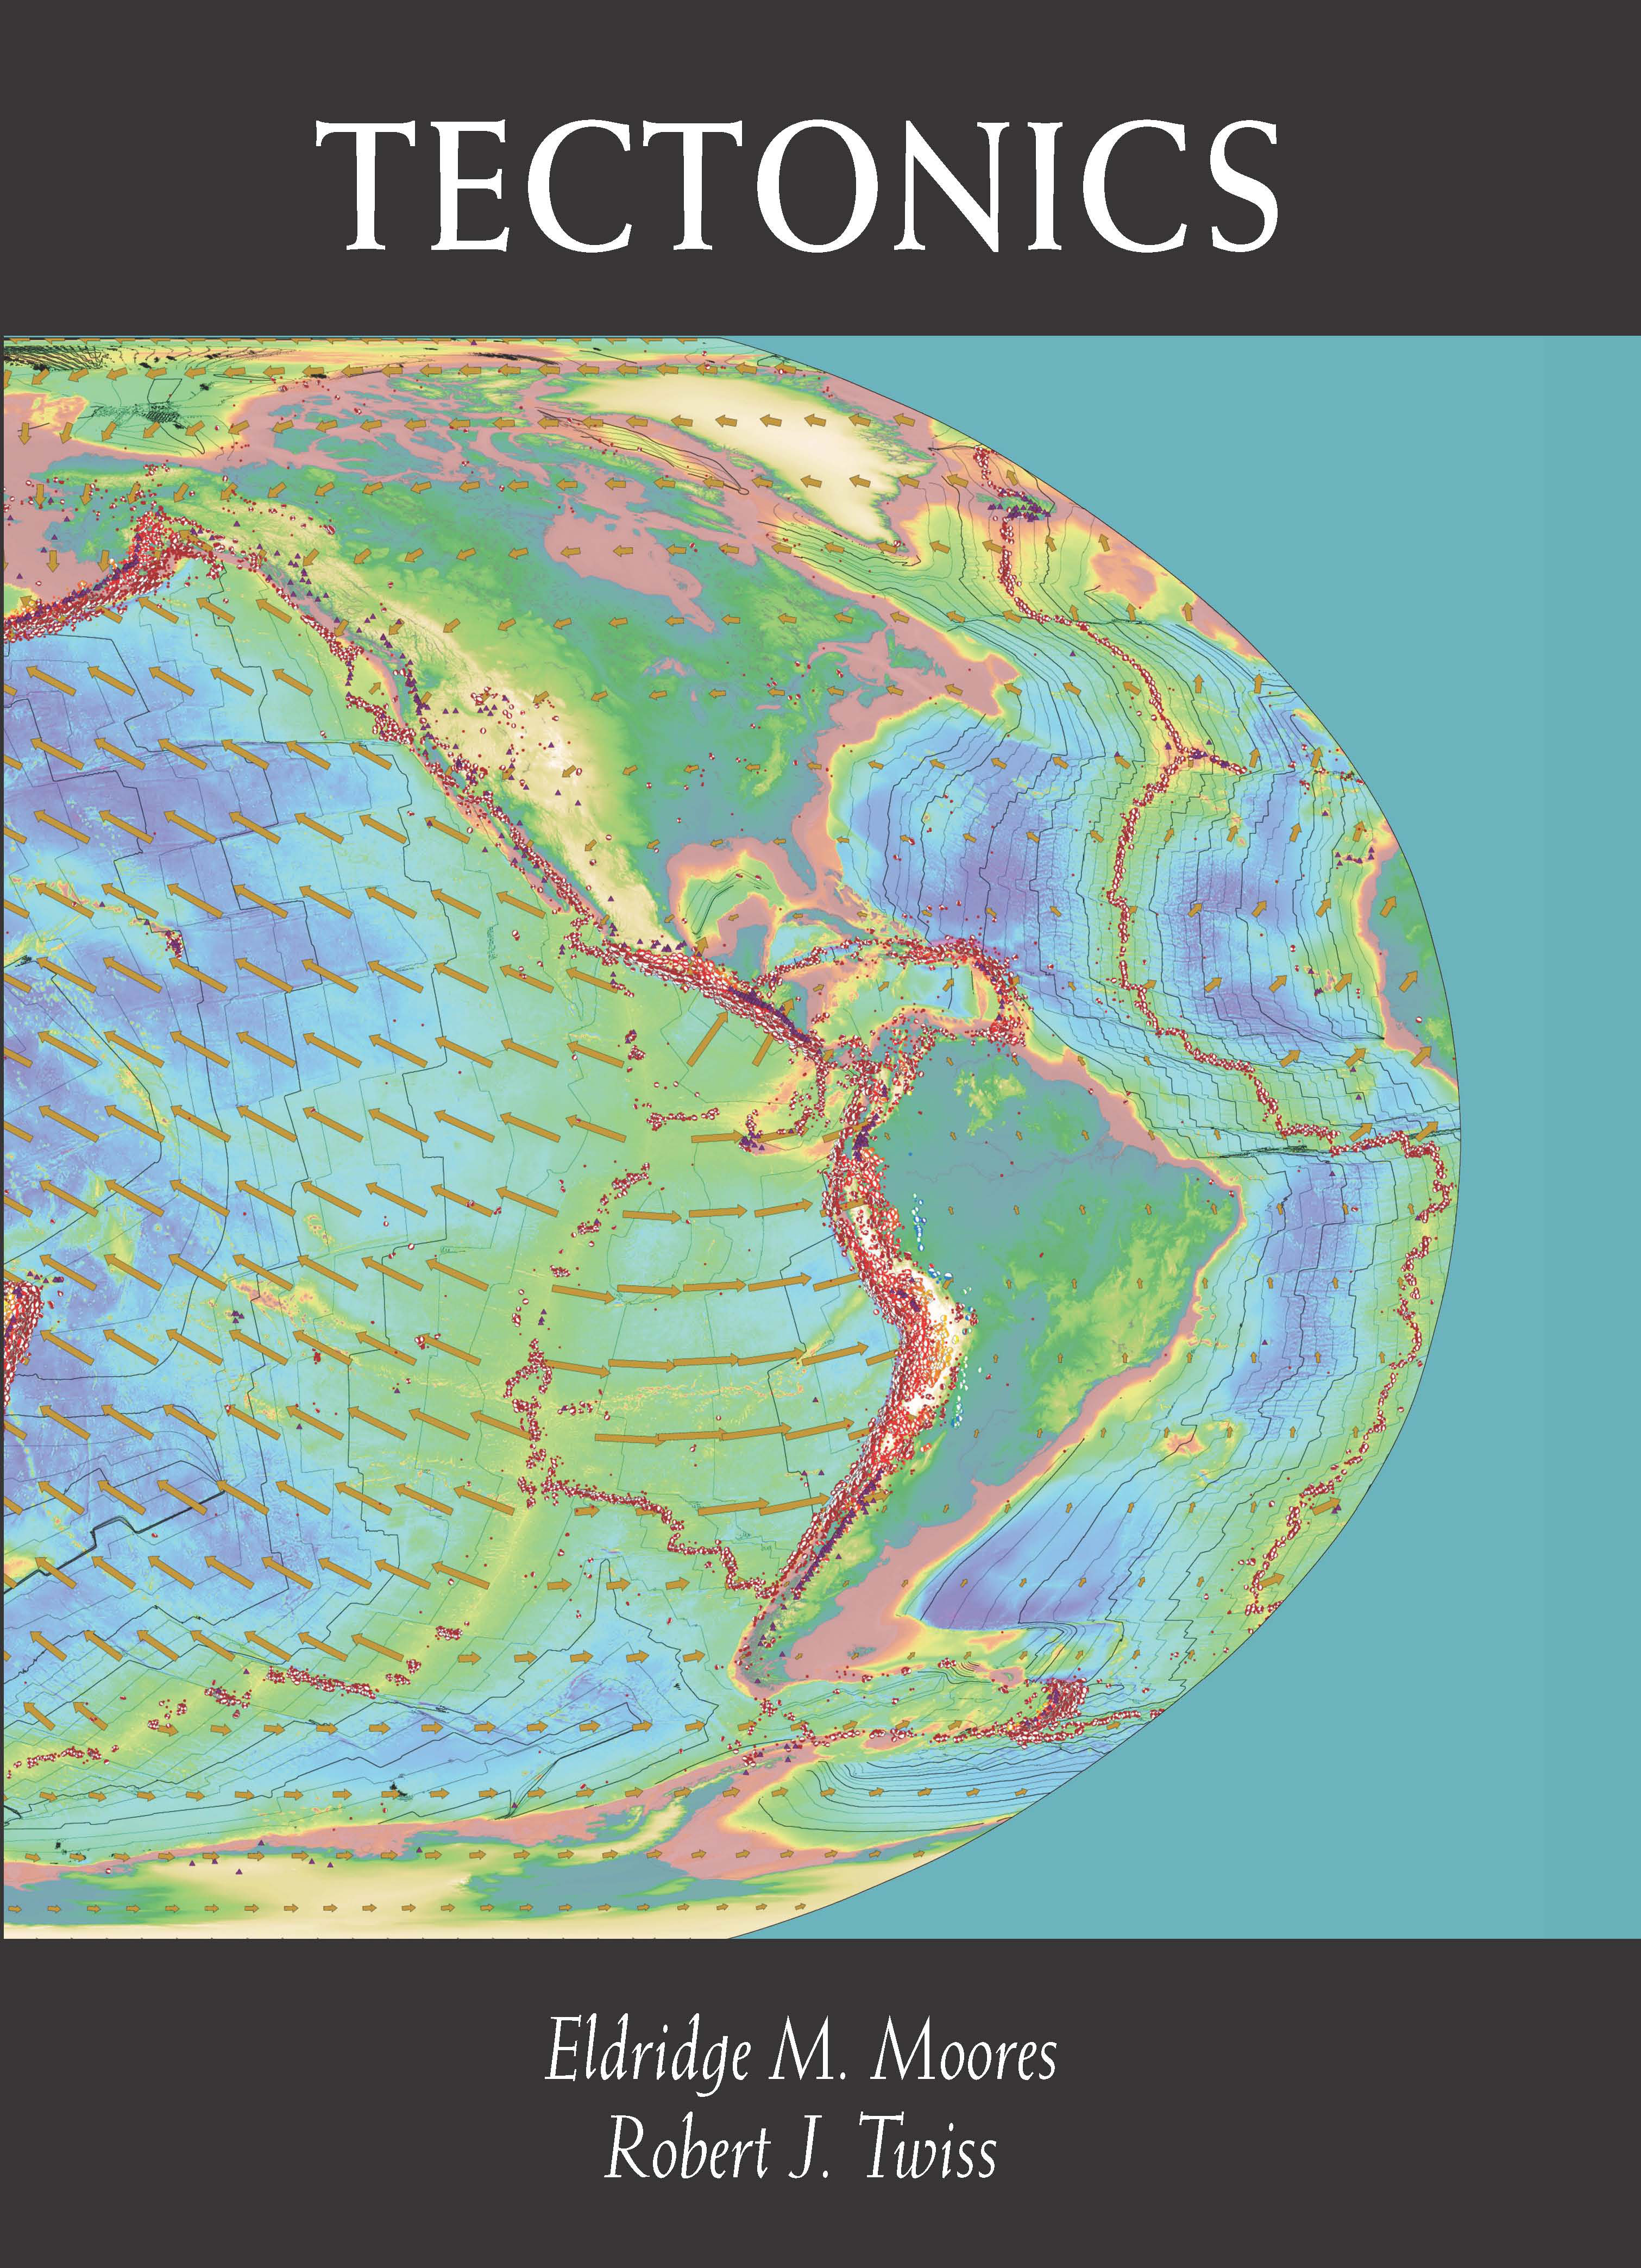 Tectonics:  by Eldridge M. Moores, Robert J. Twiss